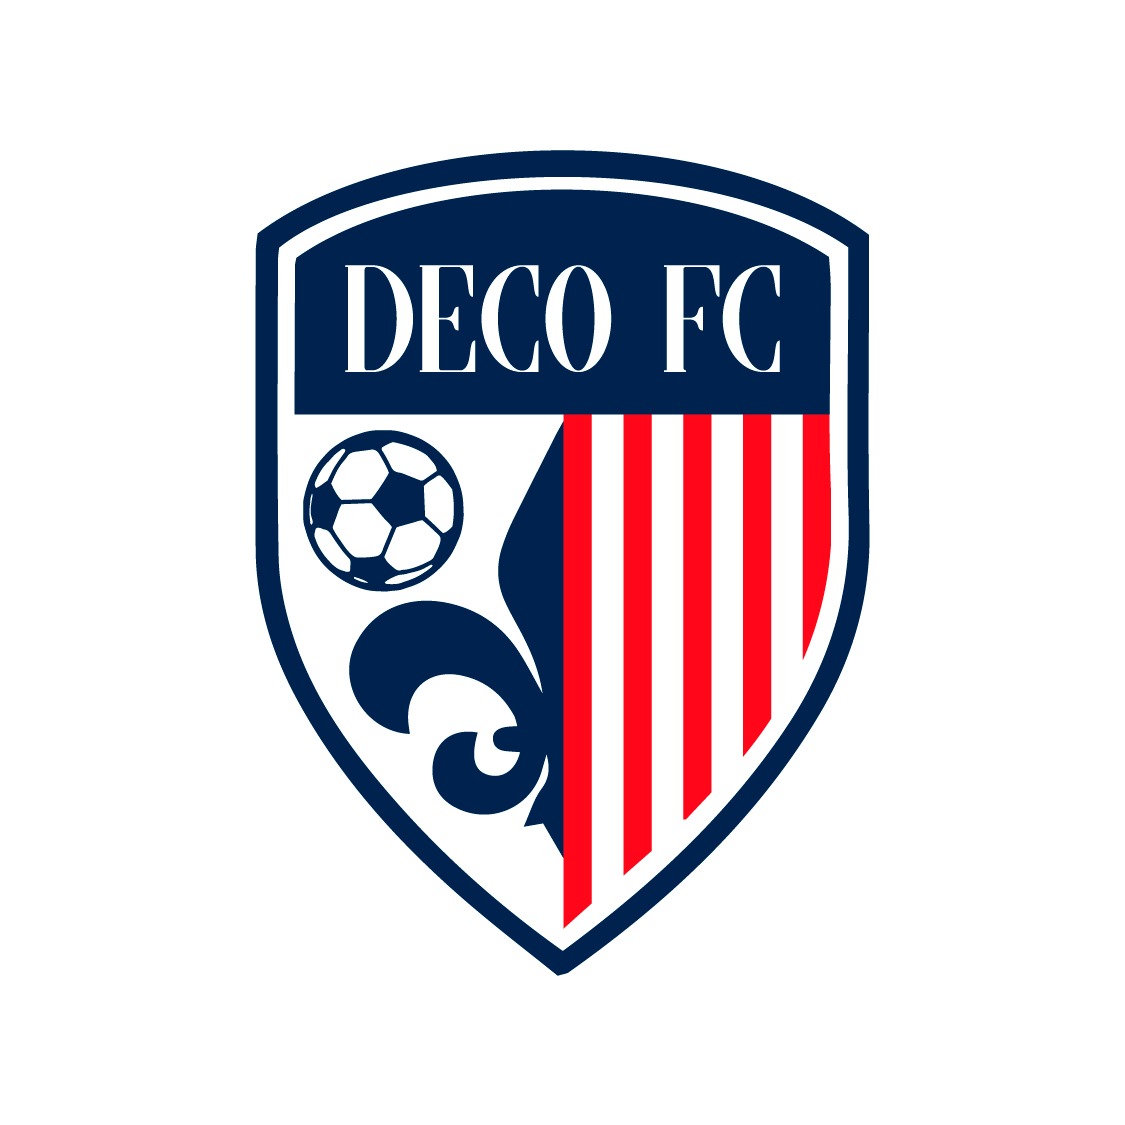 DECO FC